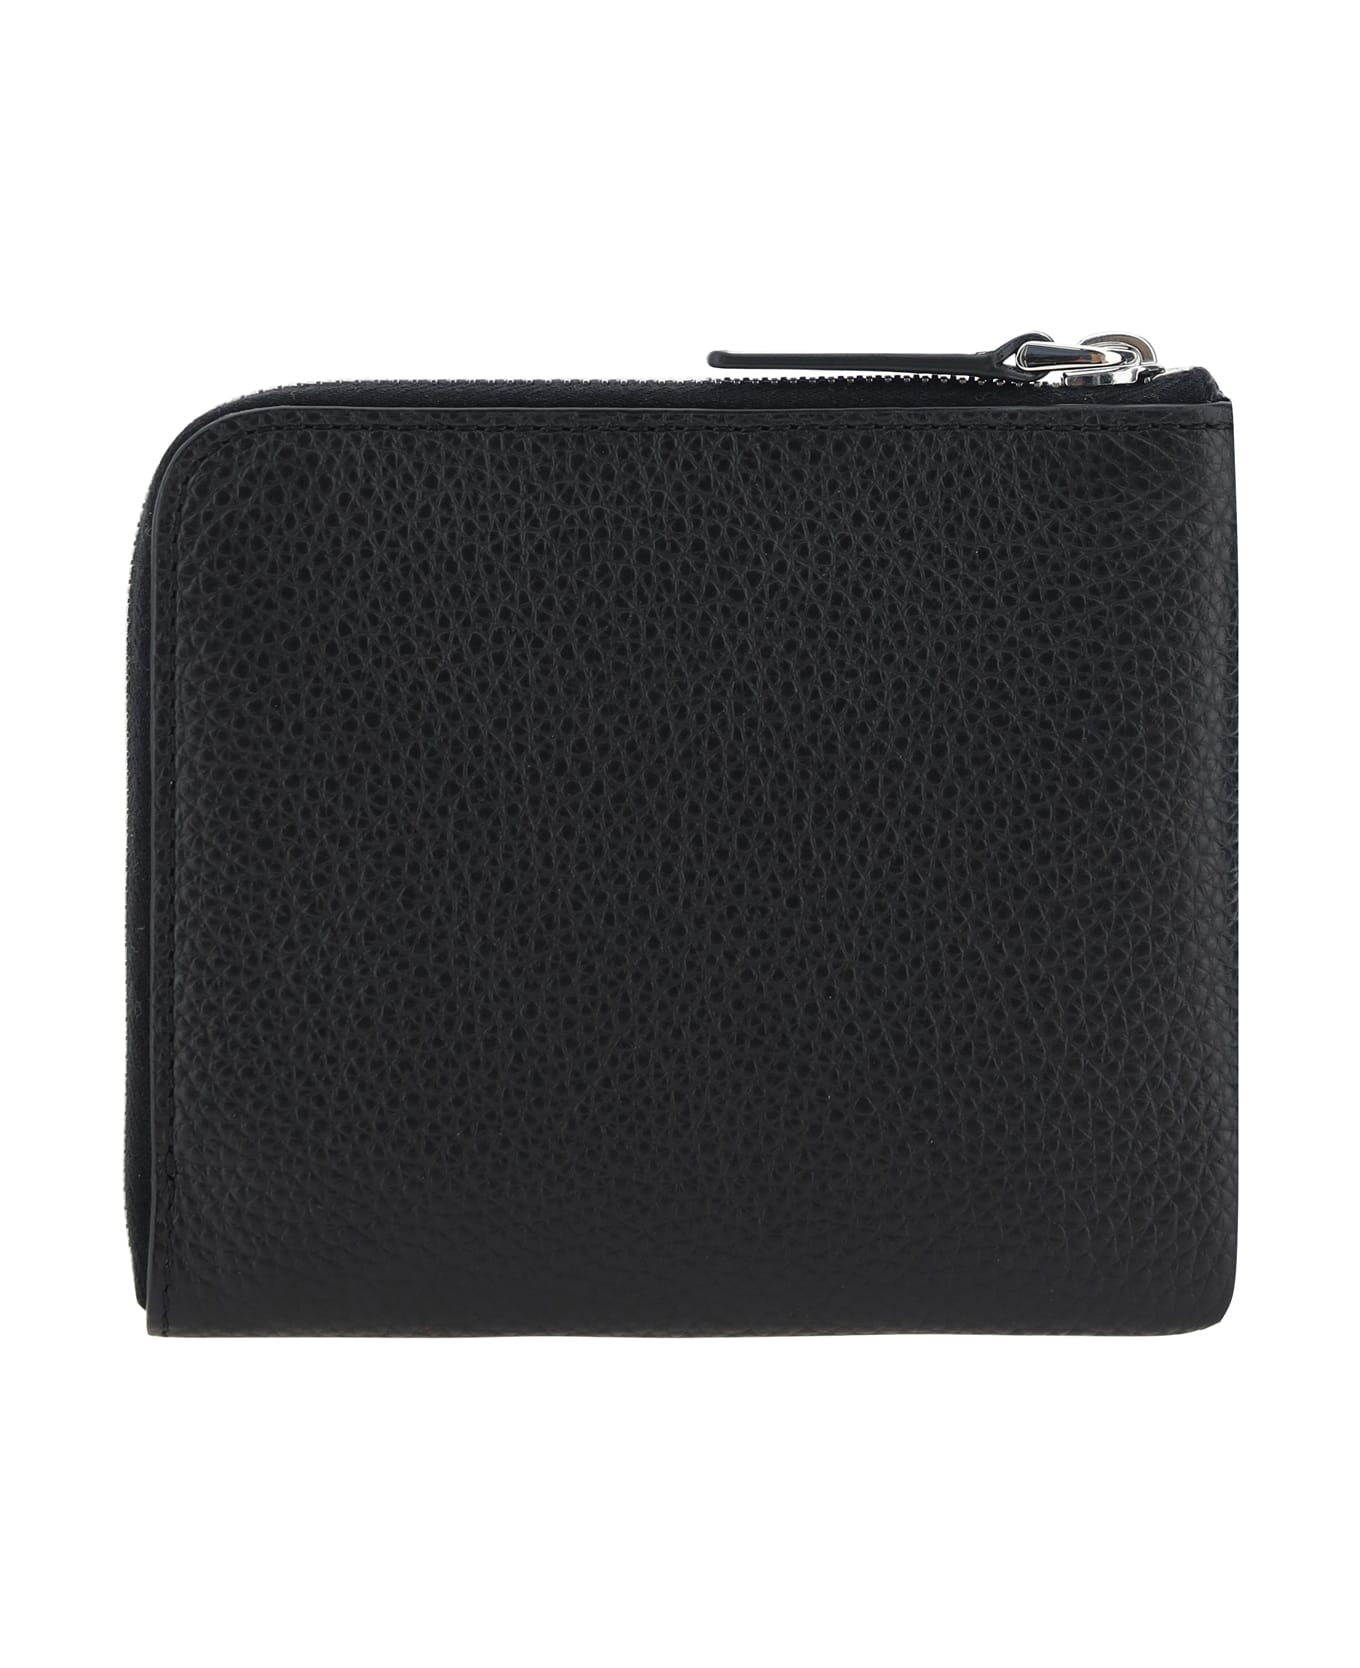 Marni Wallet - Black 財布